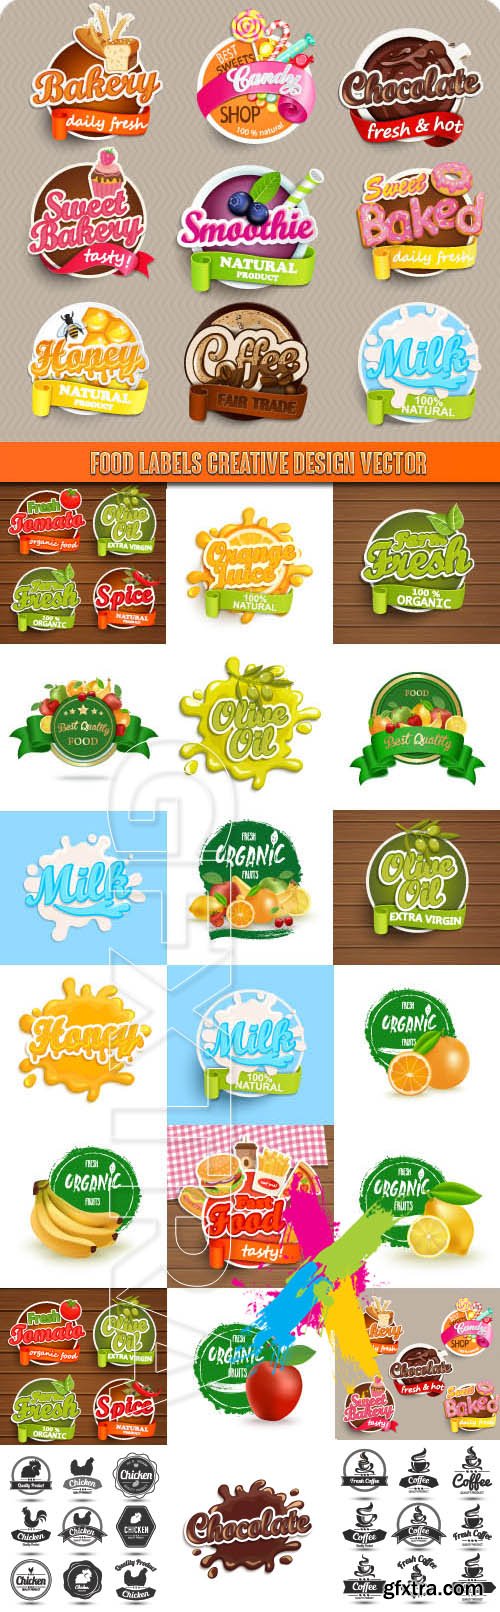 Food Labels creative design vector